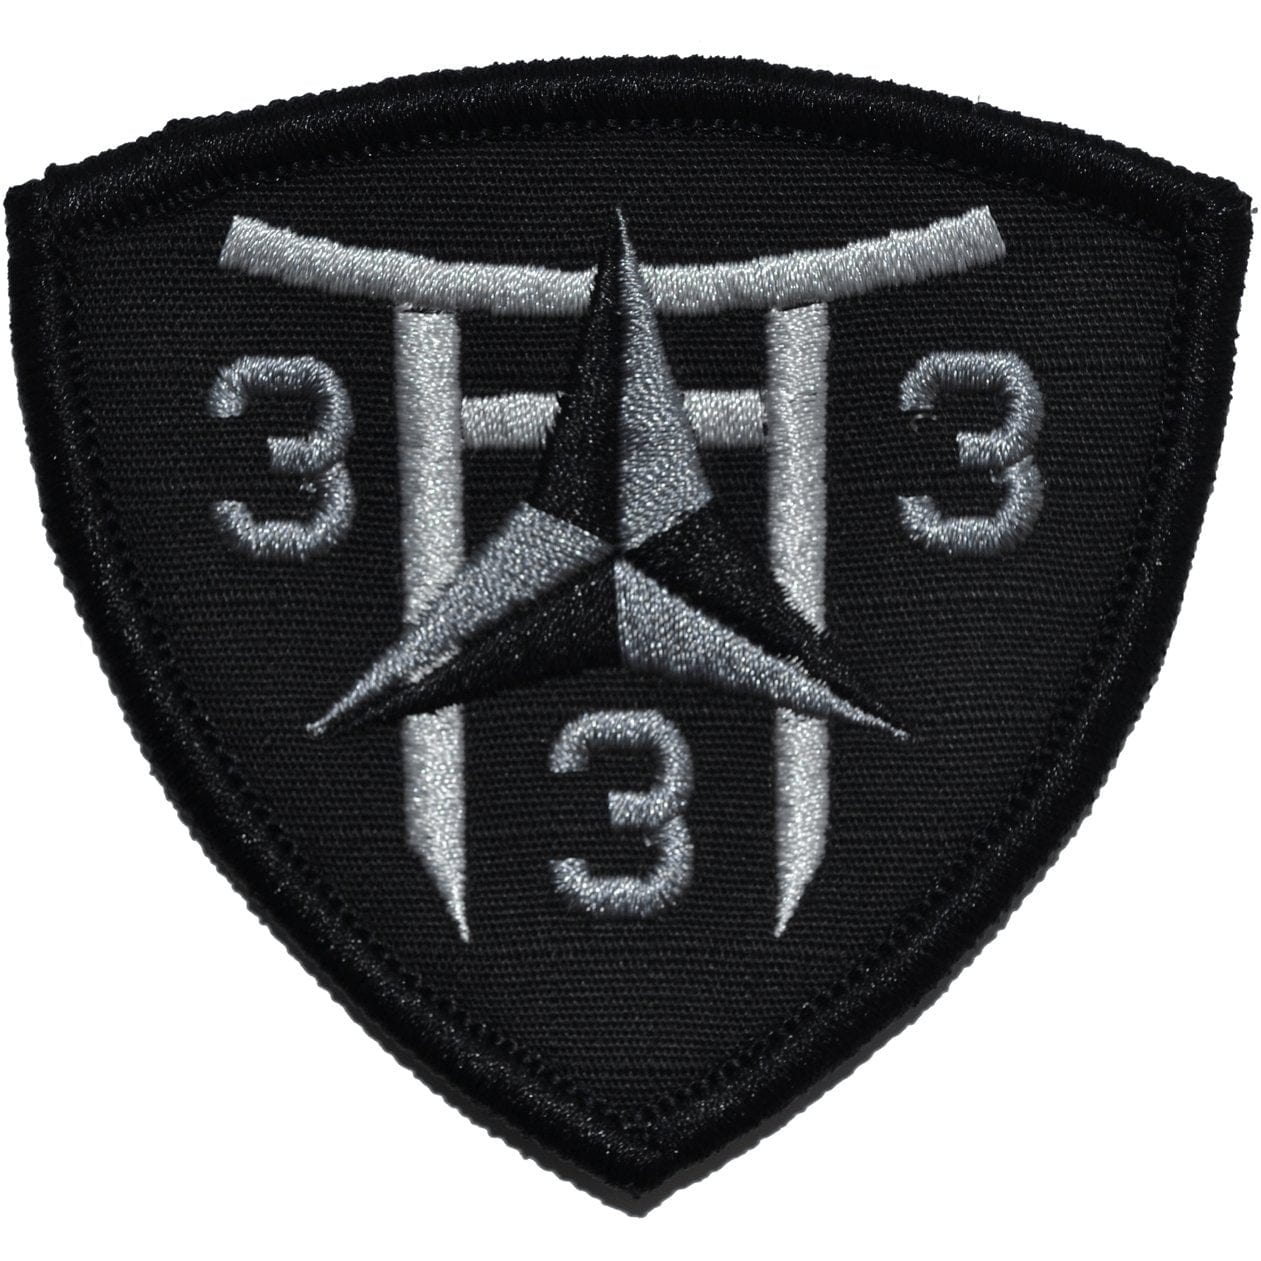 Tactical Gear Junkie Patches Black 3rd Battalion 3rd Marine Regiment Shield Patch